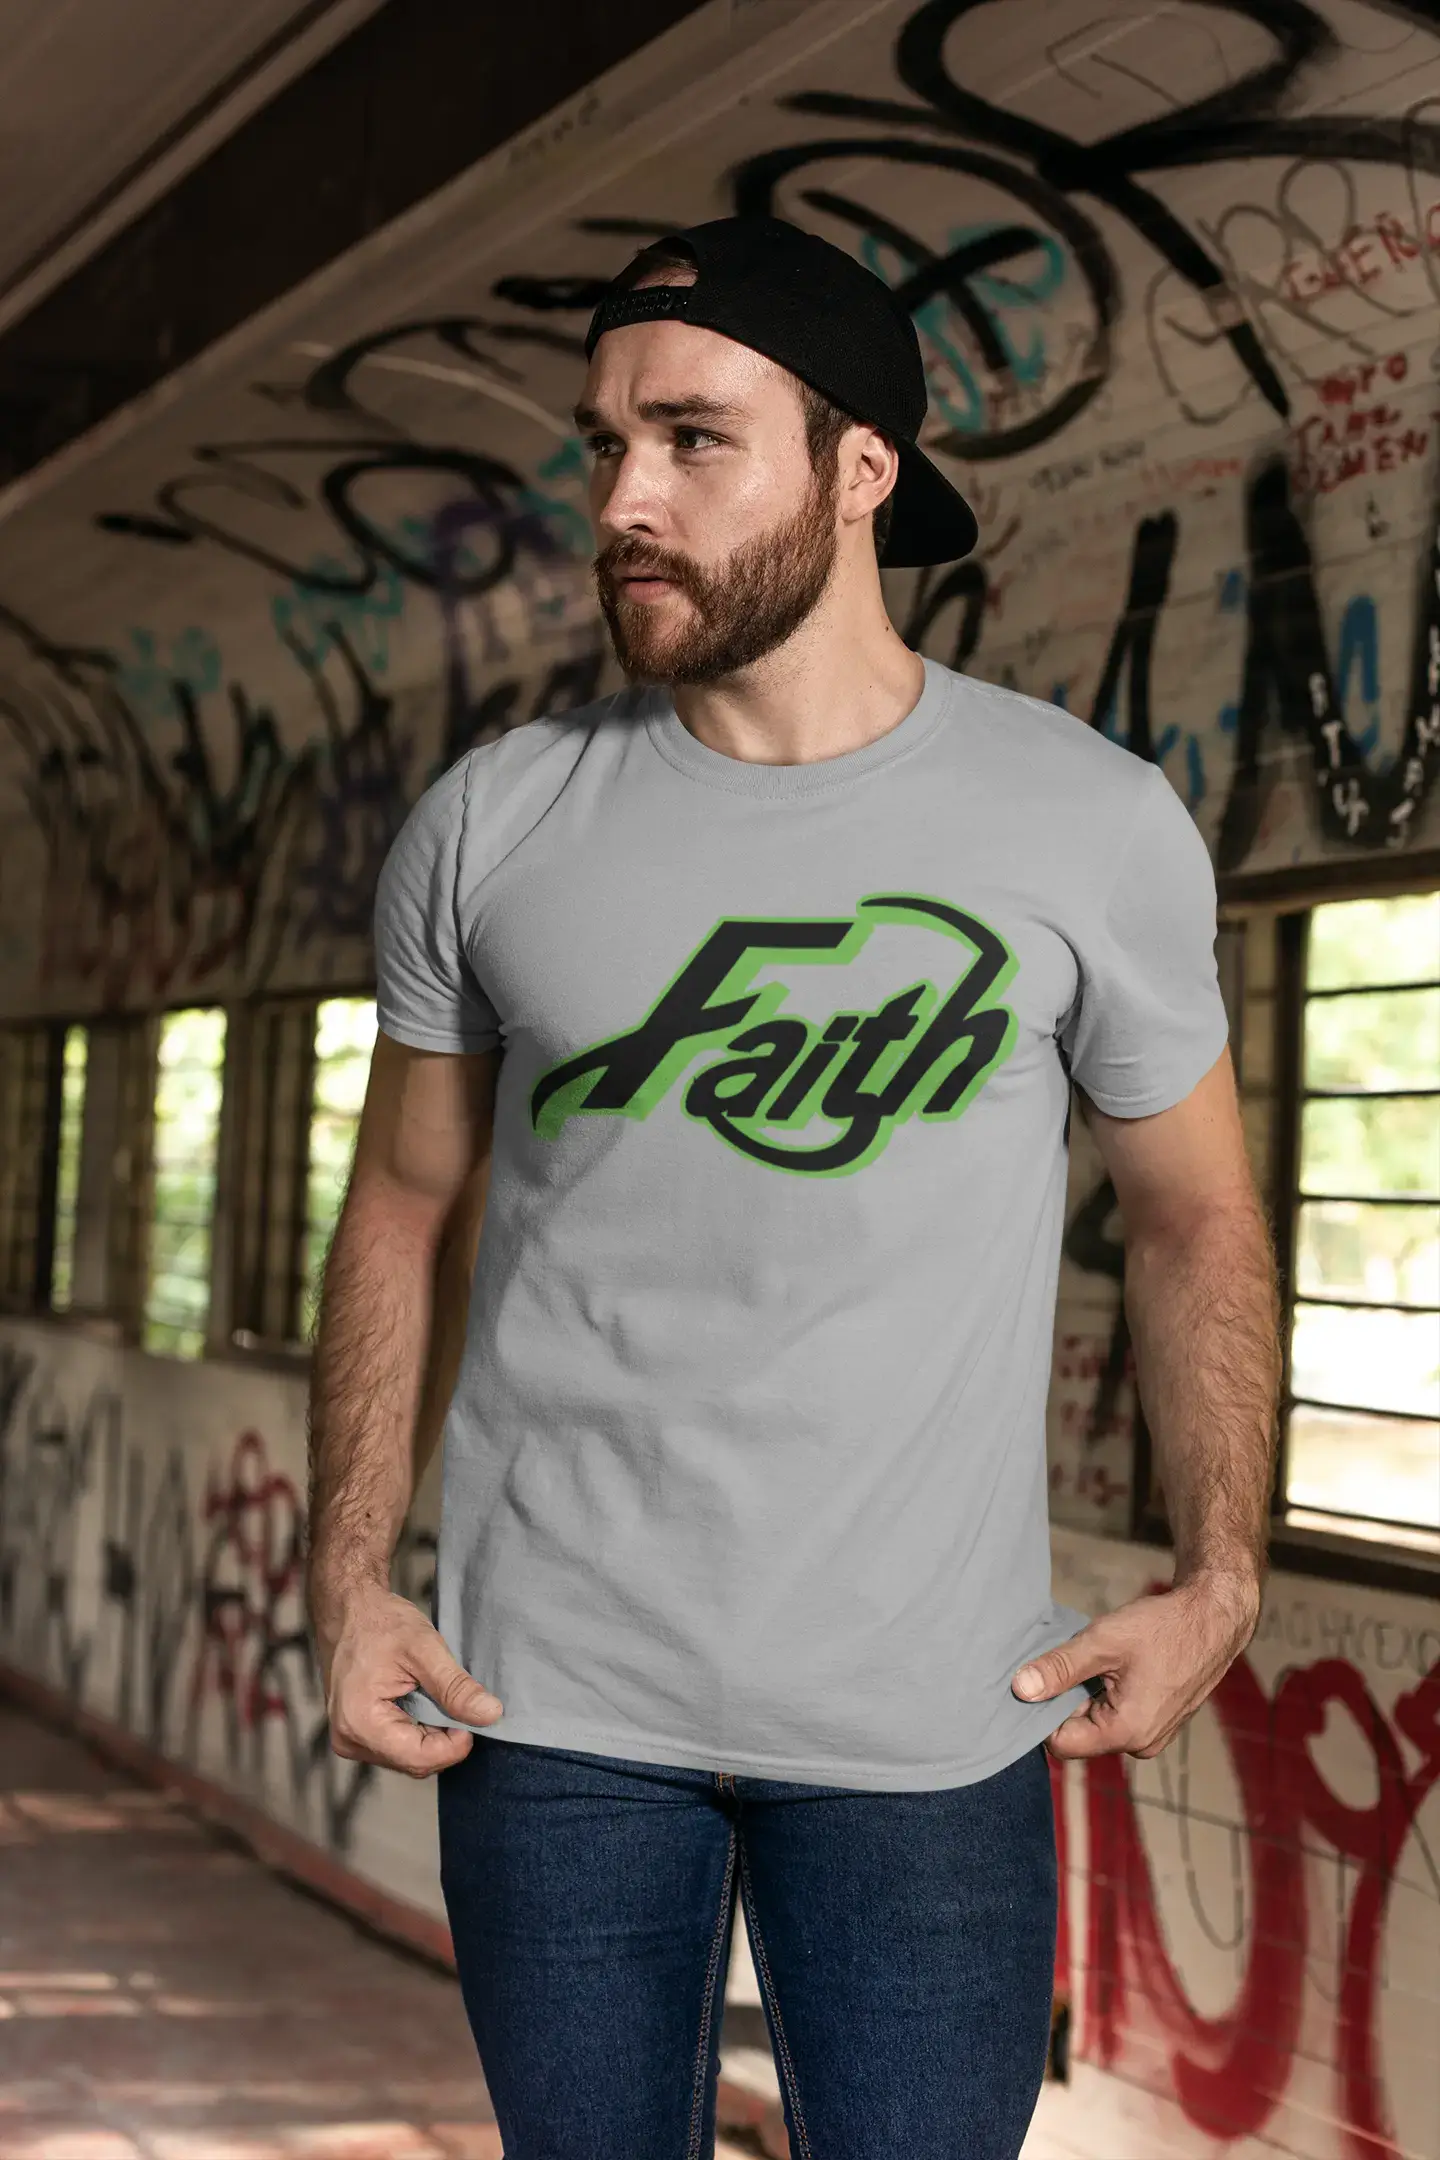 ULTRABASIC Men's T-Shirt Faith - Christ Bible Religious Shirt